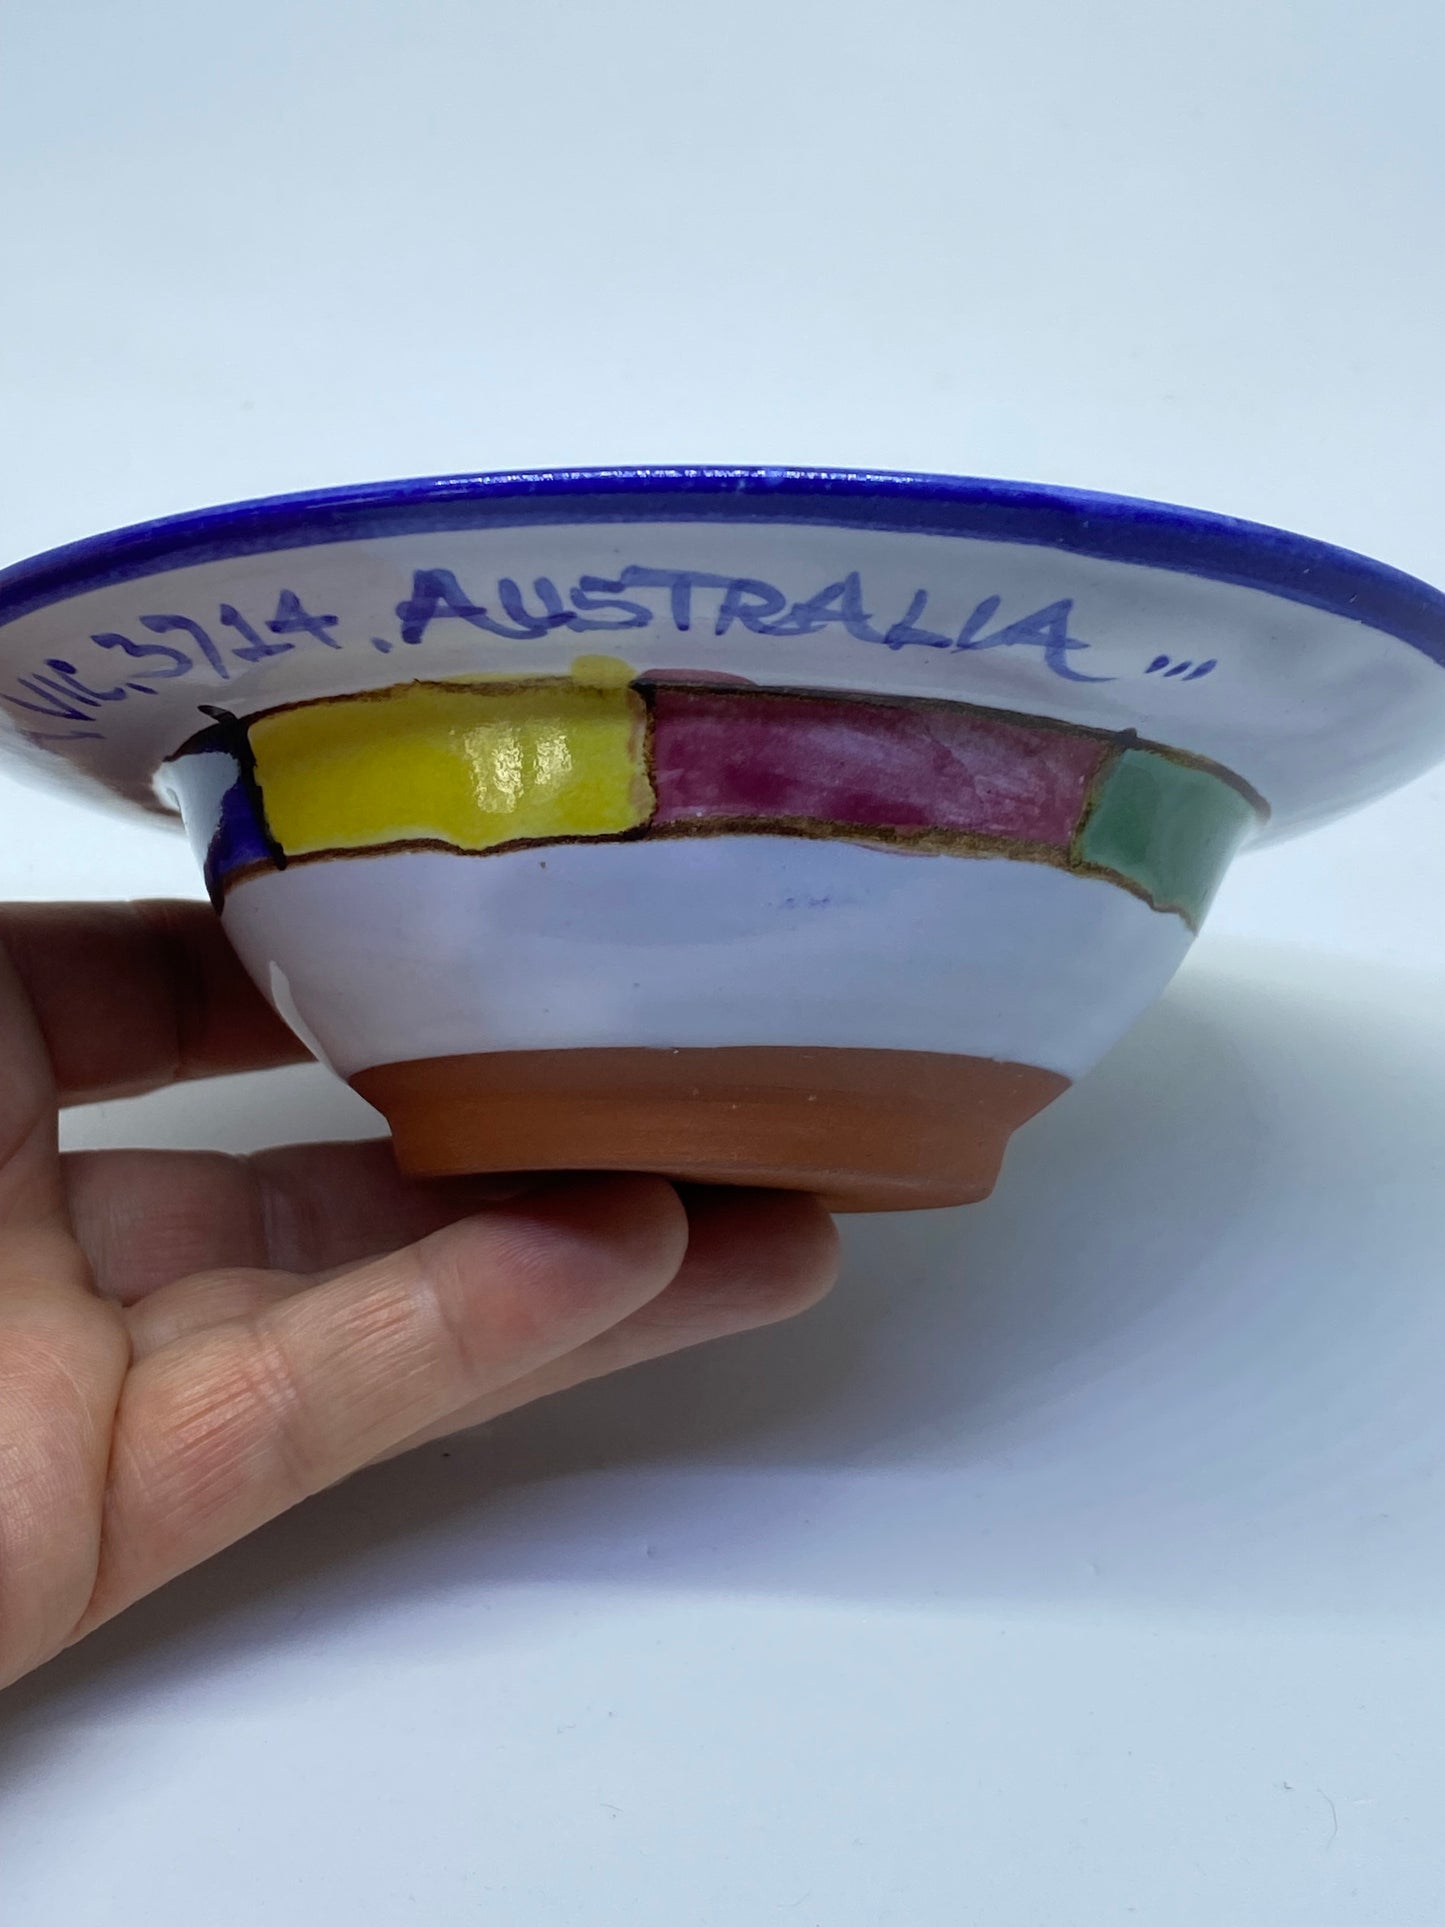 Aussie bowl - Alexandria Victoria 3714 Australia”